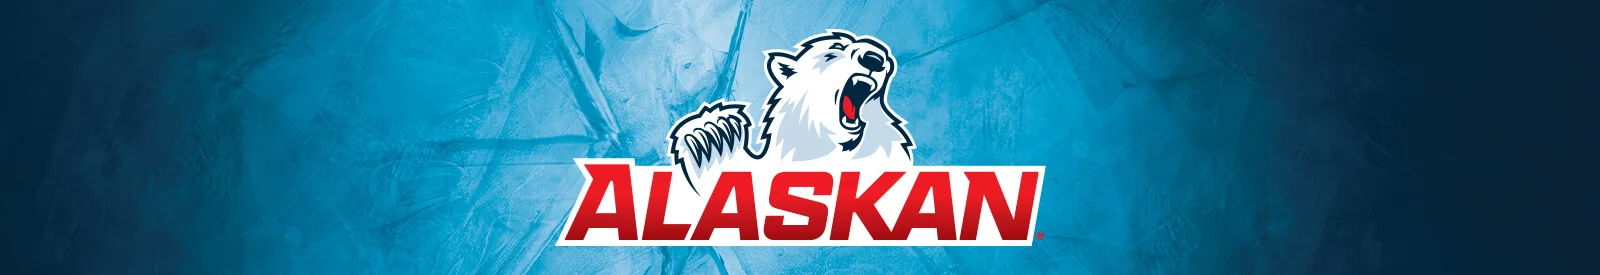 Alaskan - Brand Page - Header